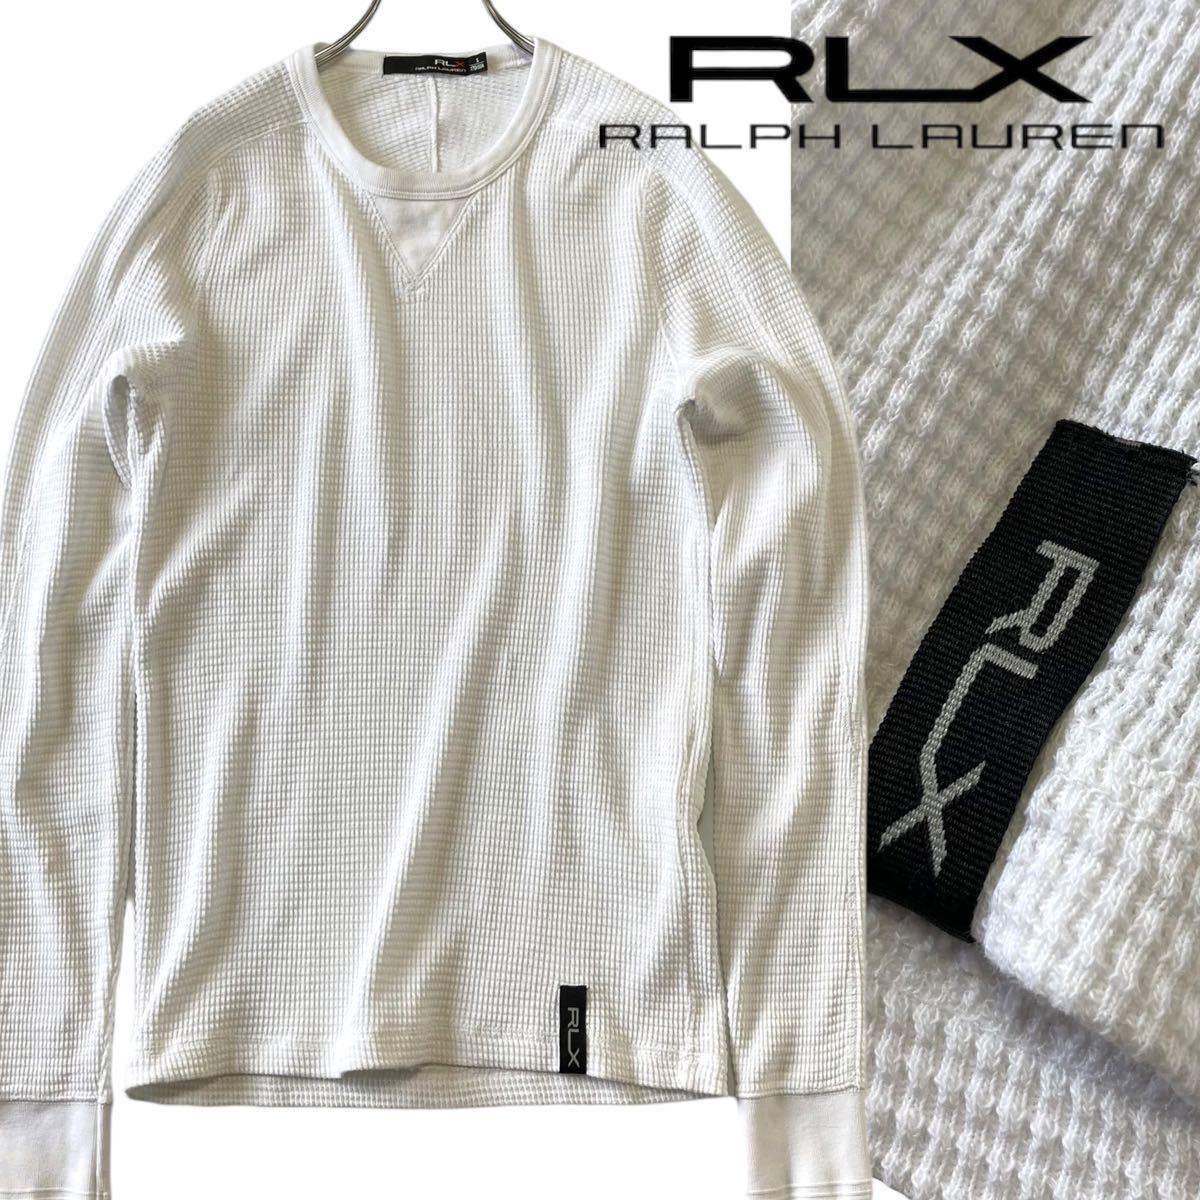 RLX ハニカムワッフルロングスリーブシャツ/前Vガゼット仕様/動的パターン採用/RRL同仕様/サーマル長袖Tシャツ/ラルフローレン/ホワイト/S_画像1